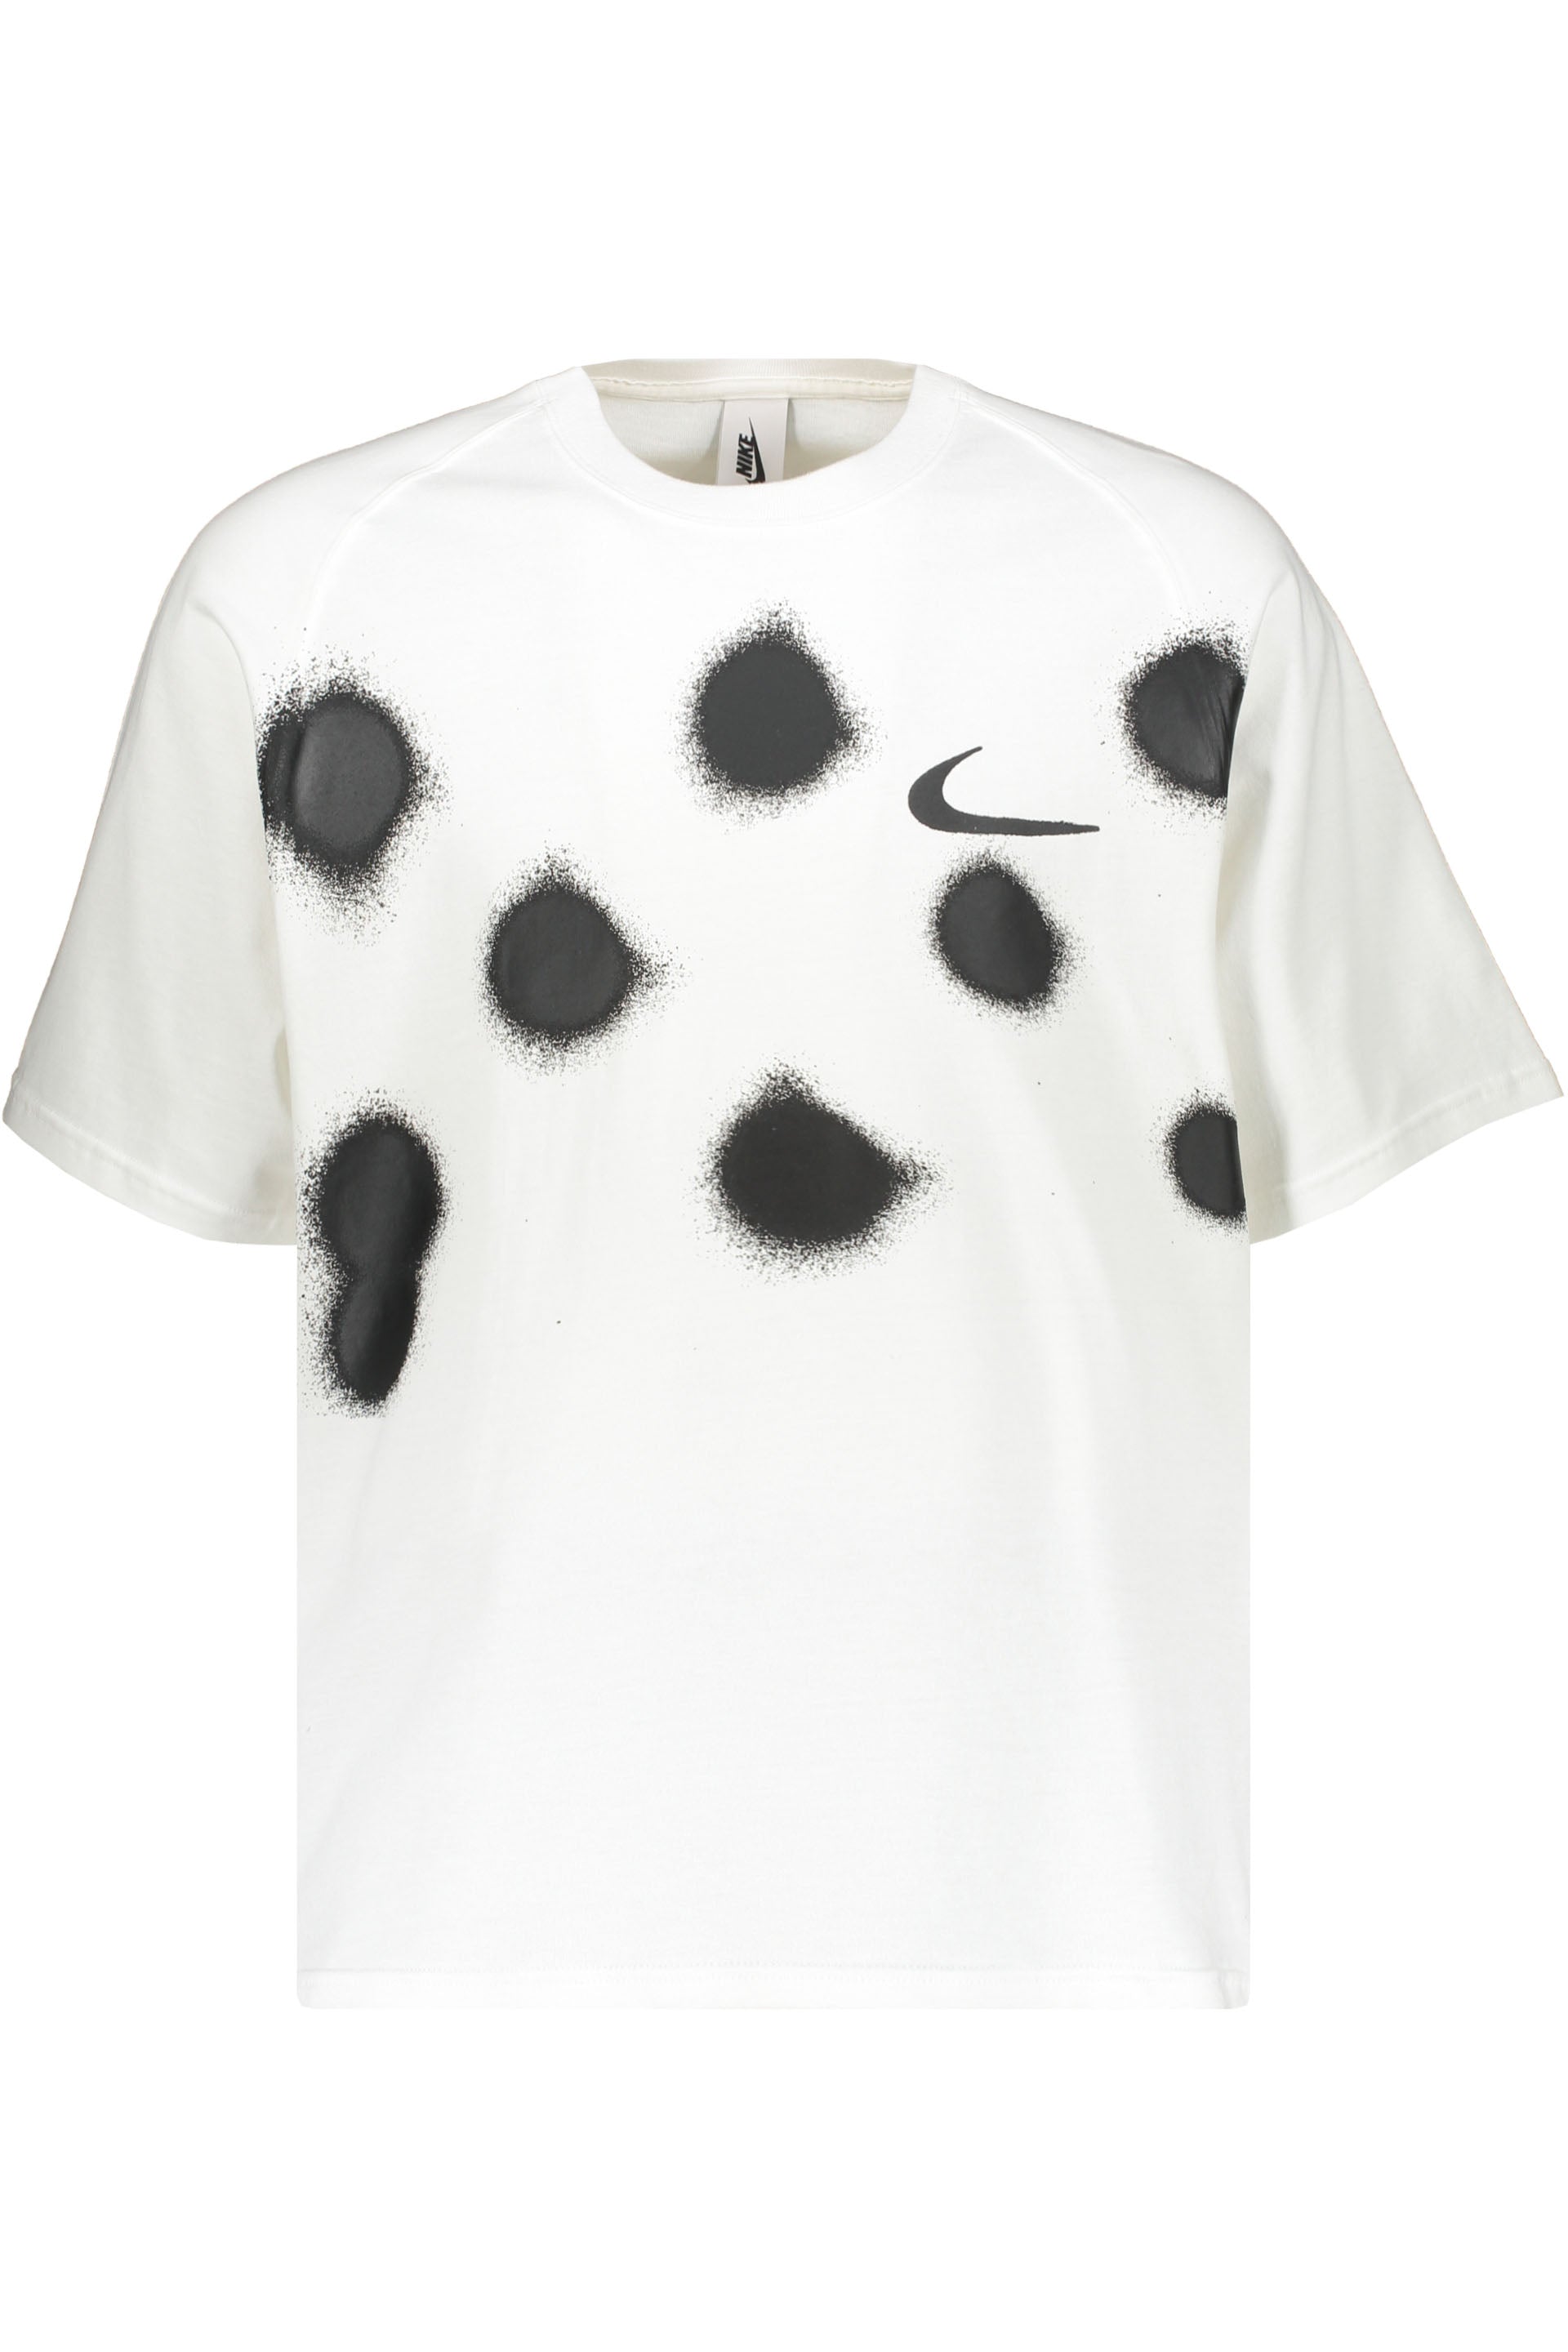 Nike x Off White short sleeve t-shirt